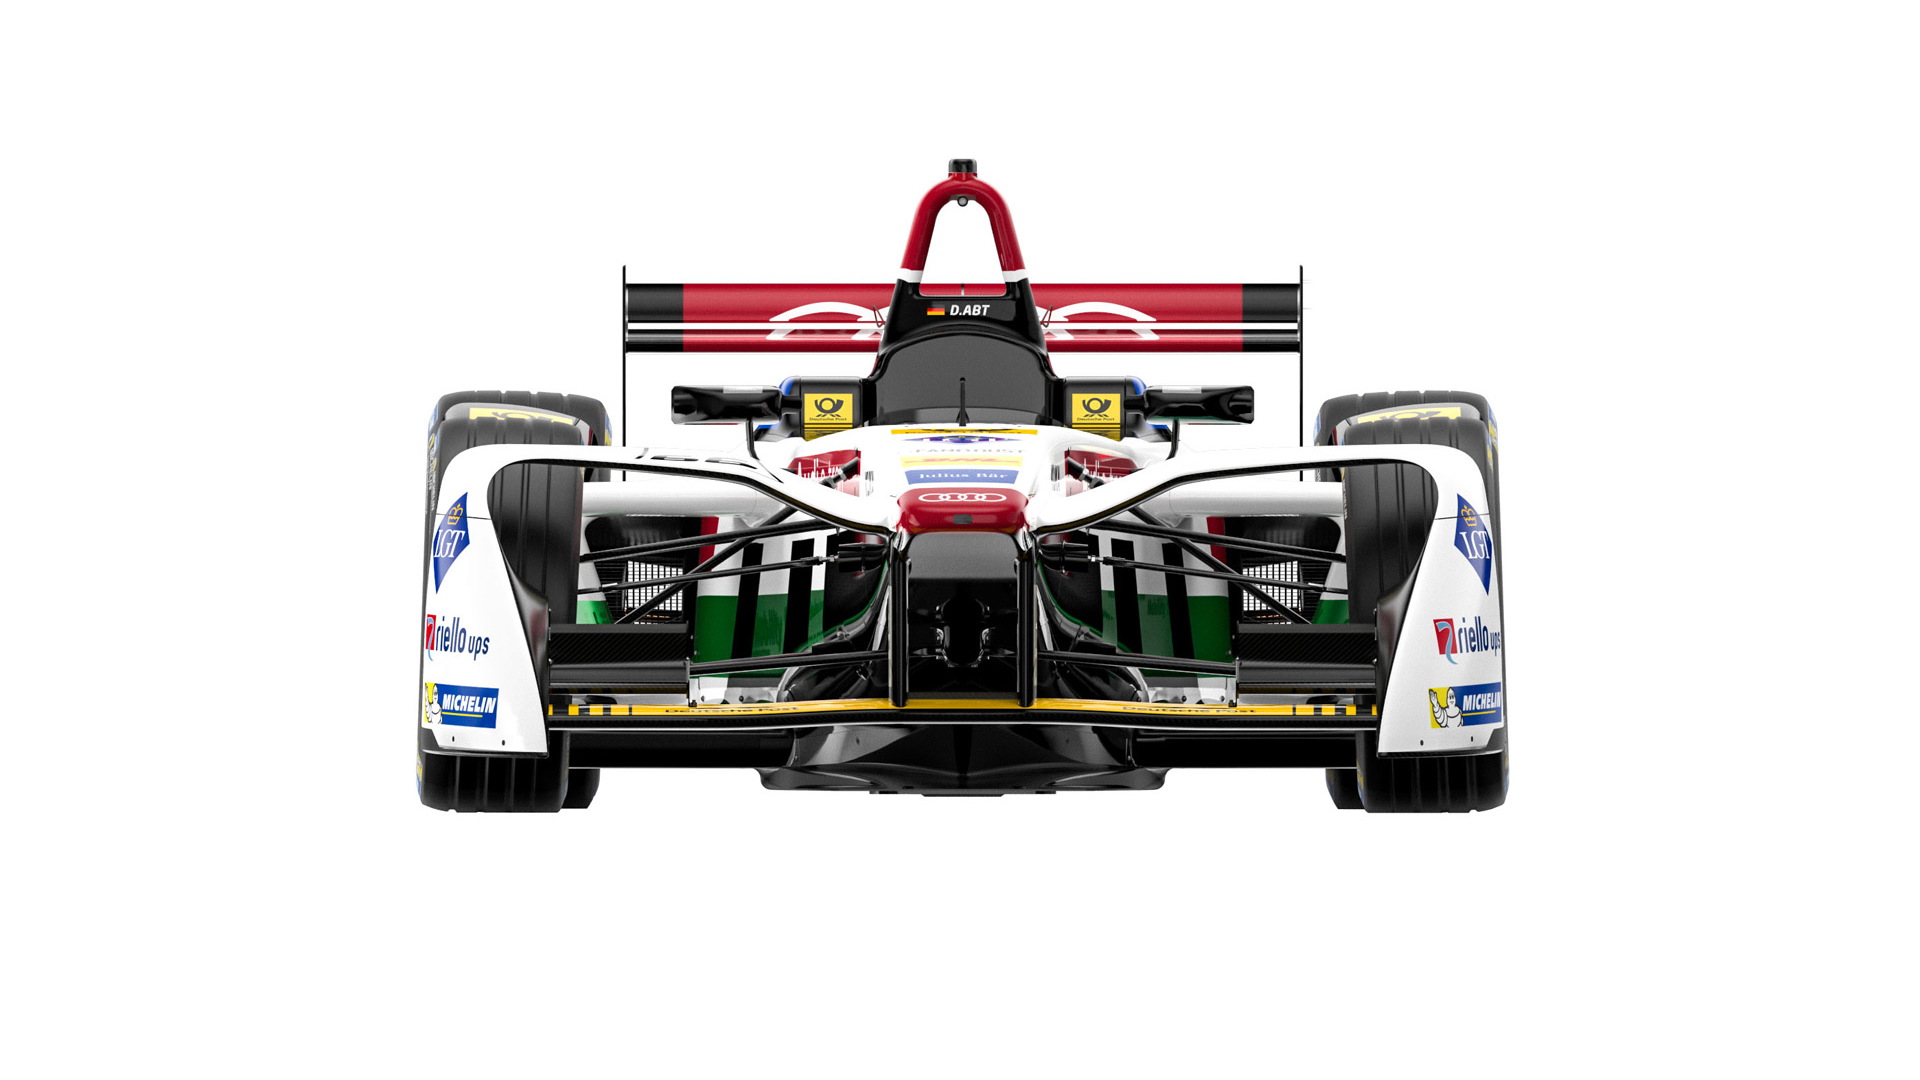 2017/2018 Audi e-tron FE04 Formula E racecar